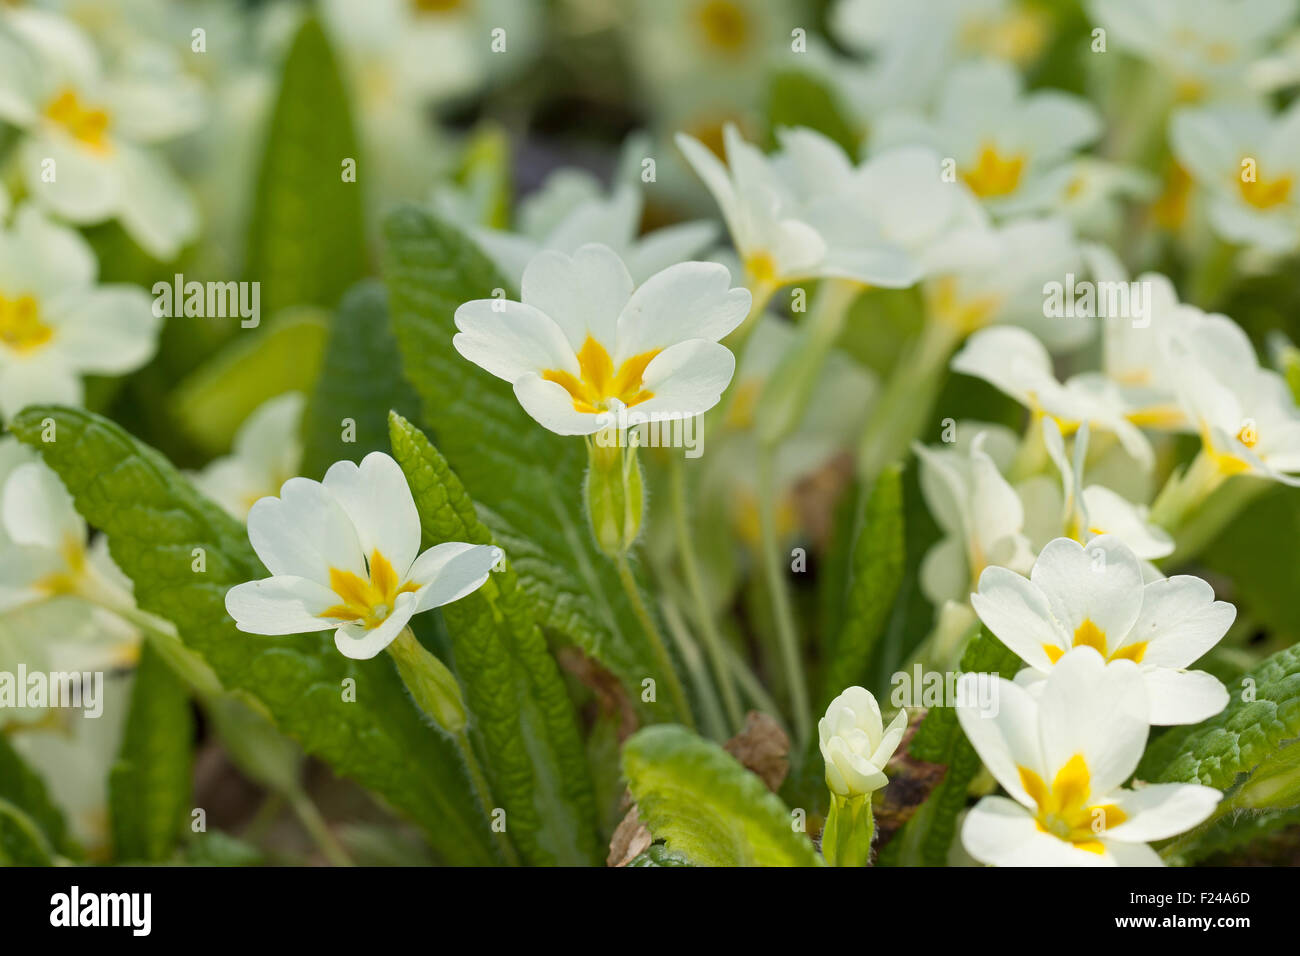 Common primrose, English primrose, Stängellose Schlüsselblume, Primel, Priemel, Primula vulgaris, Primula acaulis Stock Photo